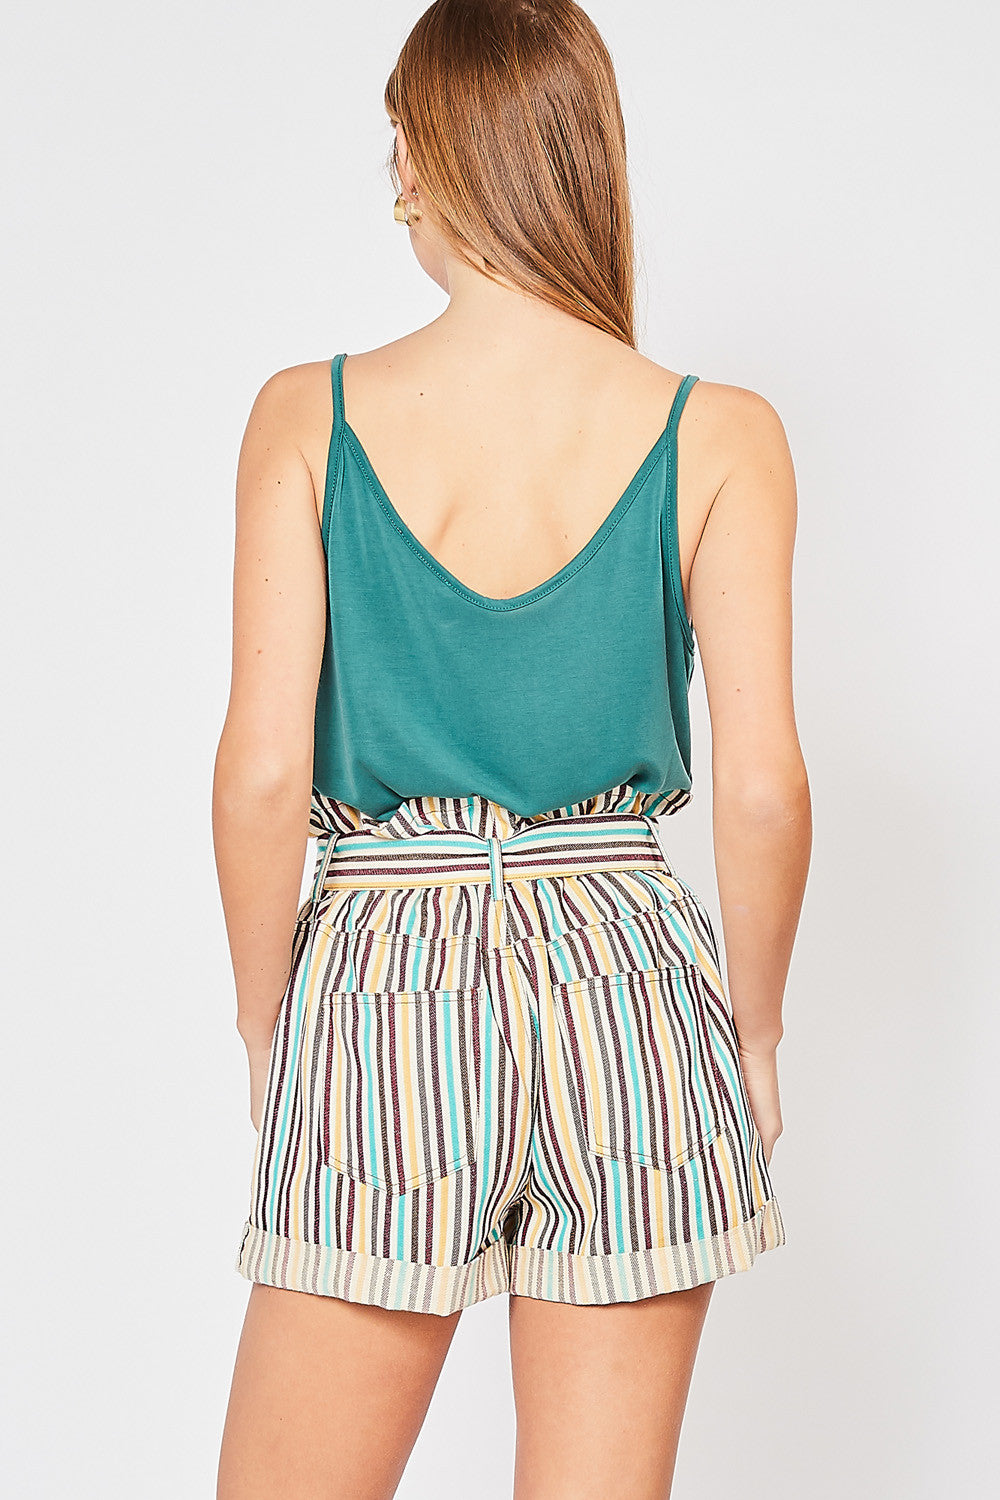 Lauderdale Striped Shorts - Jade